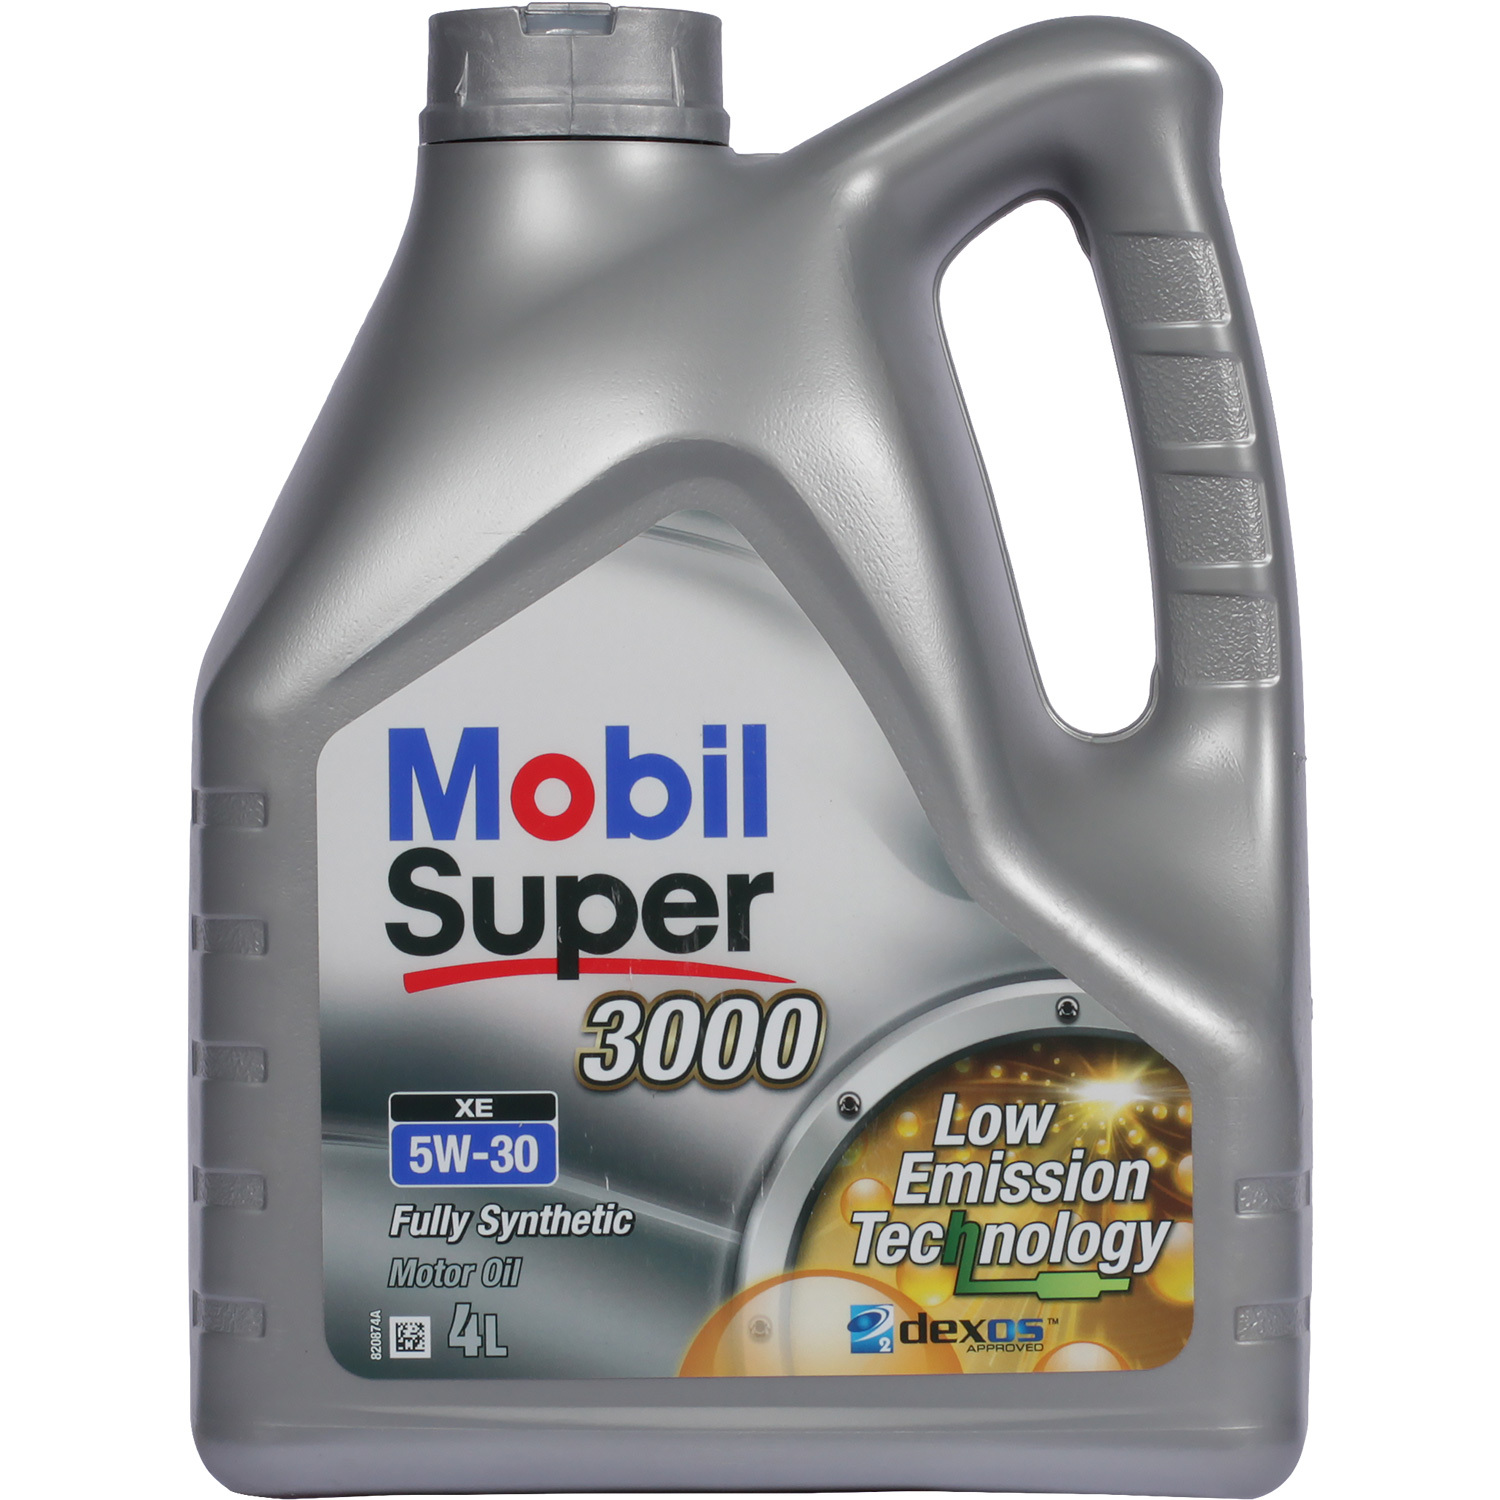 Mobil Моторное масло Mobil Super 3000 XE 5W-30, 4 л моторное масло синтетическое mobil super 3000 5w 40 acea a3 b4 4 л